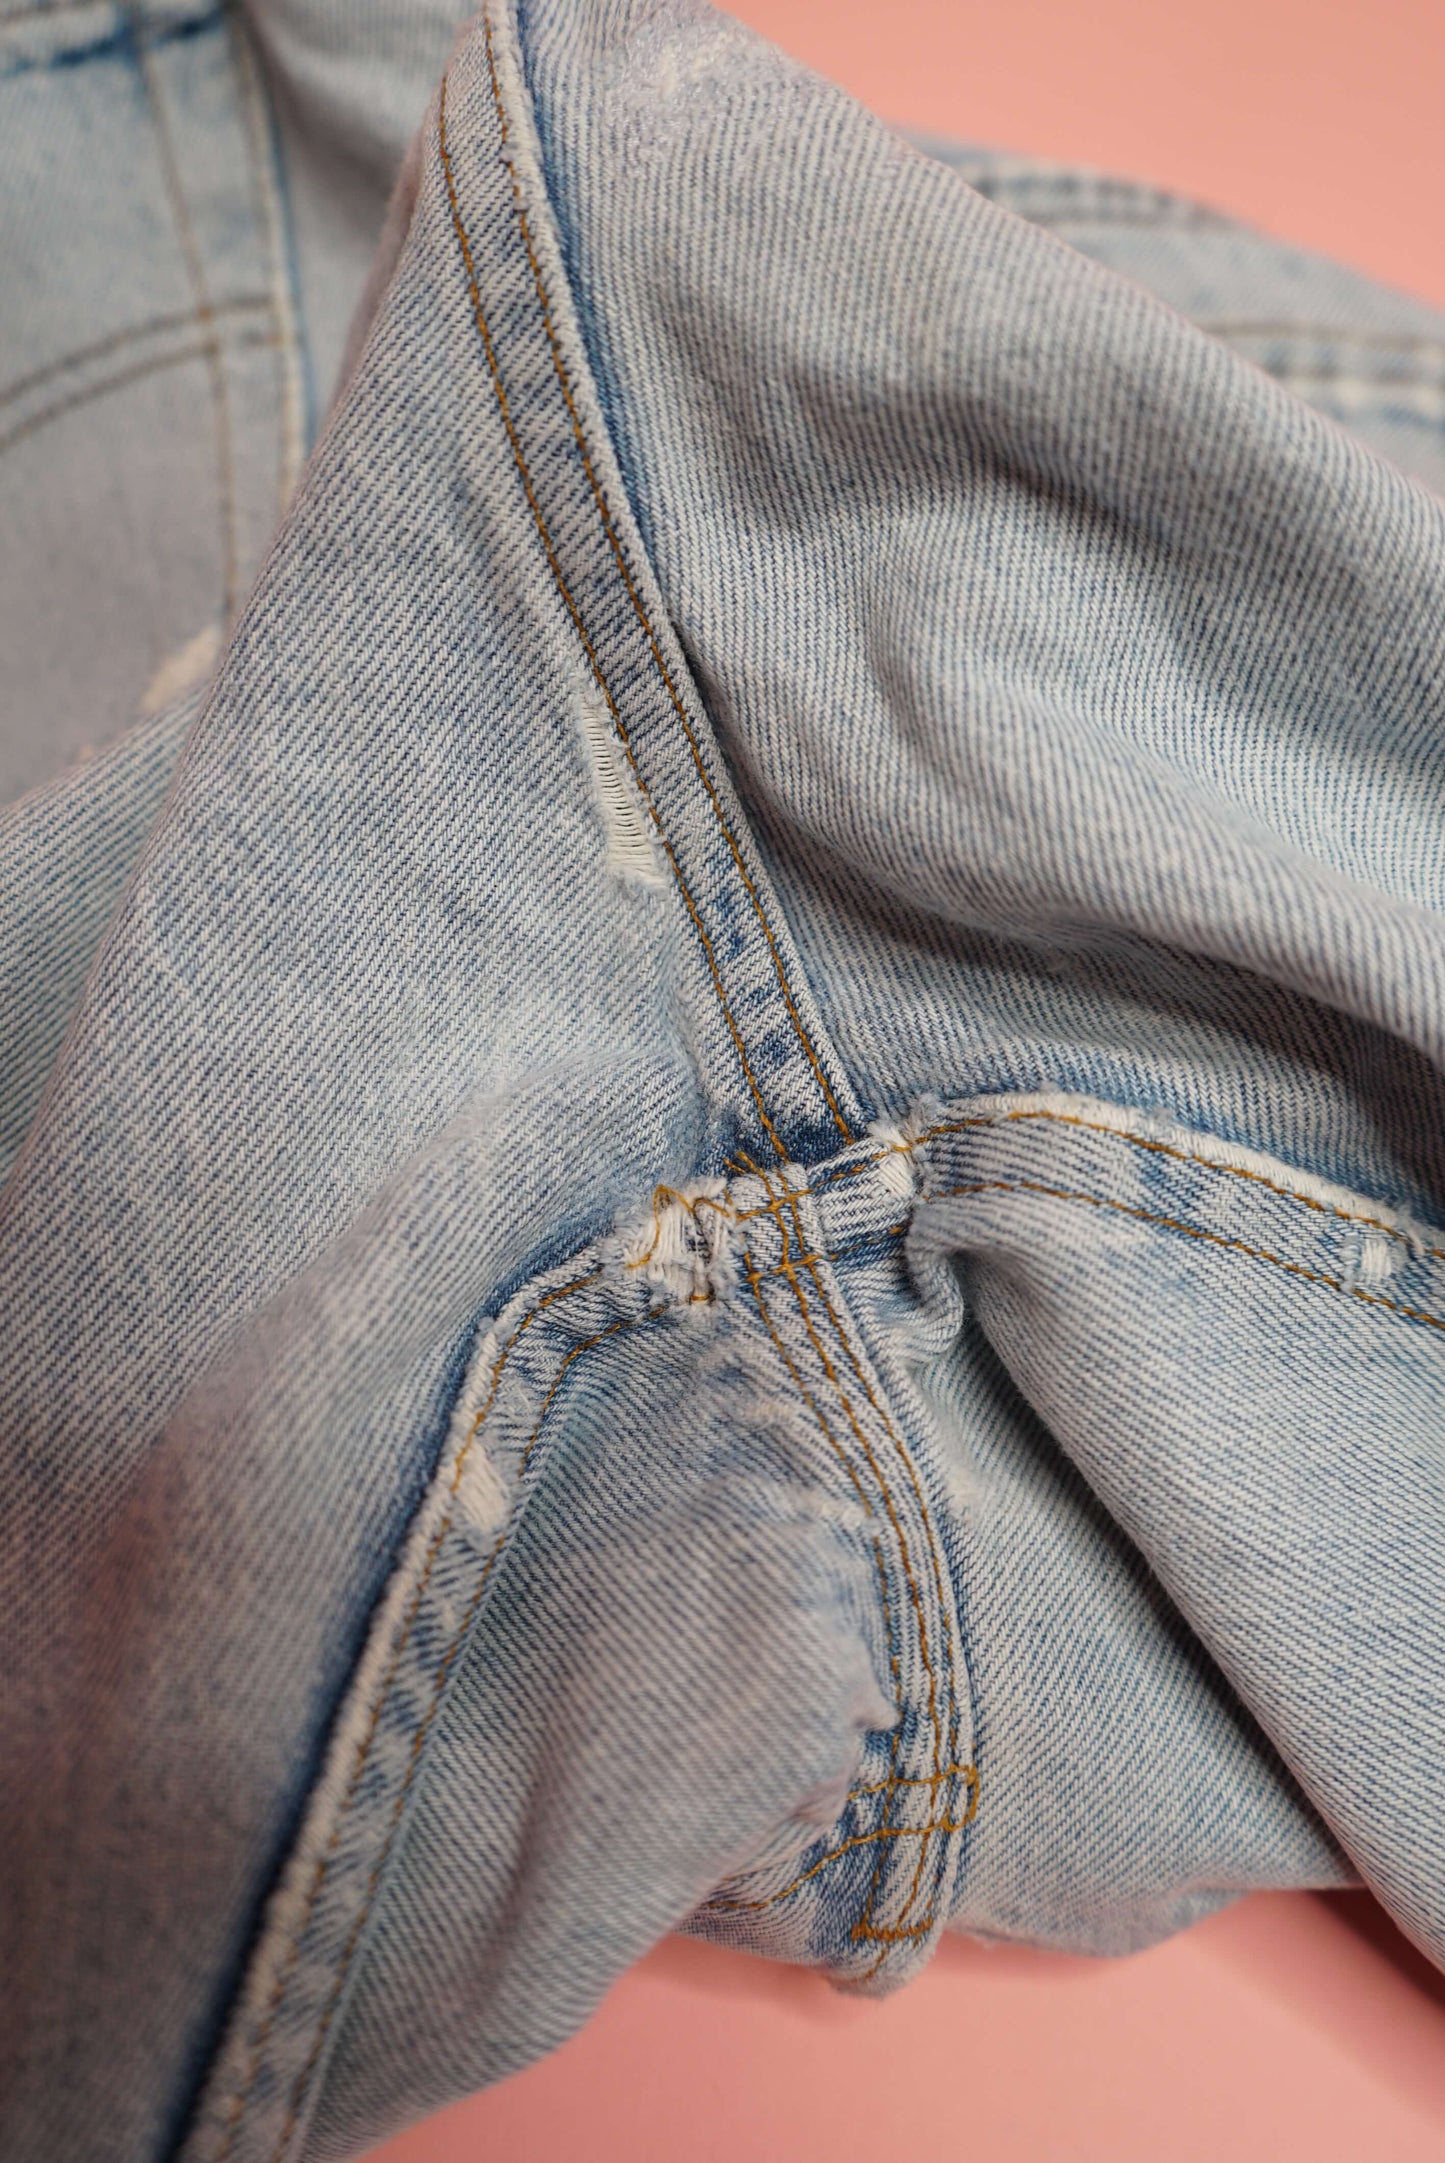 Vintage USA Levi's 501 Jeans Light Blue Distressed W30-31